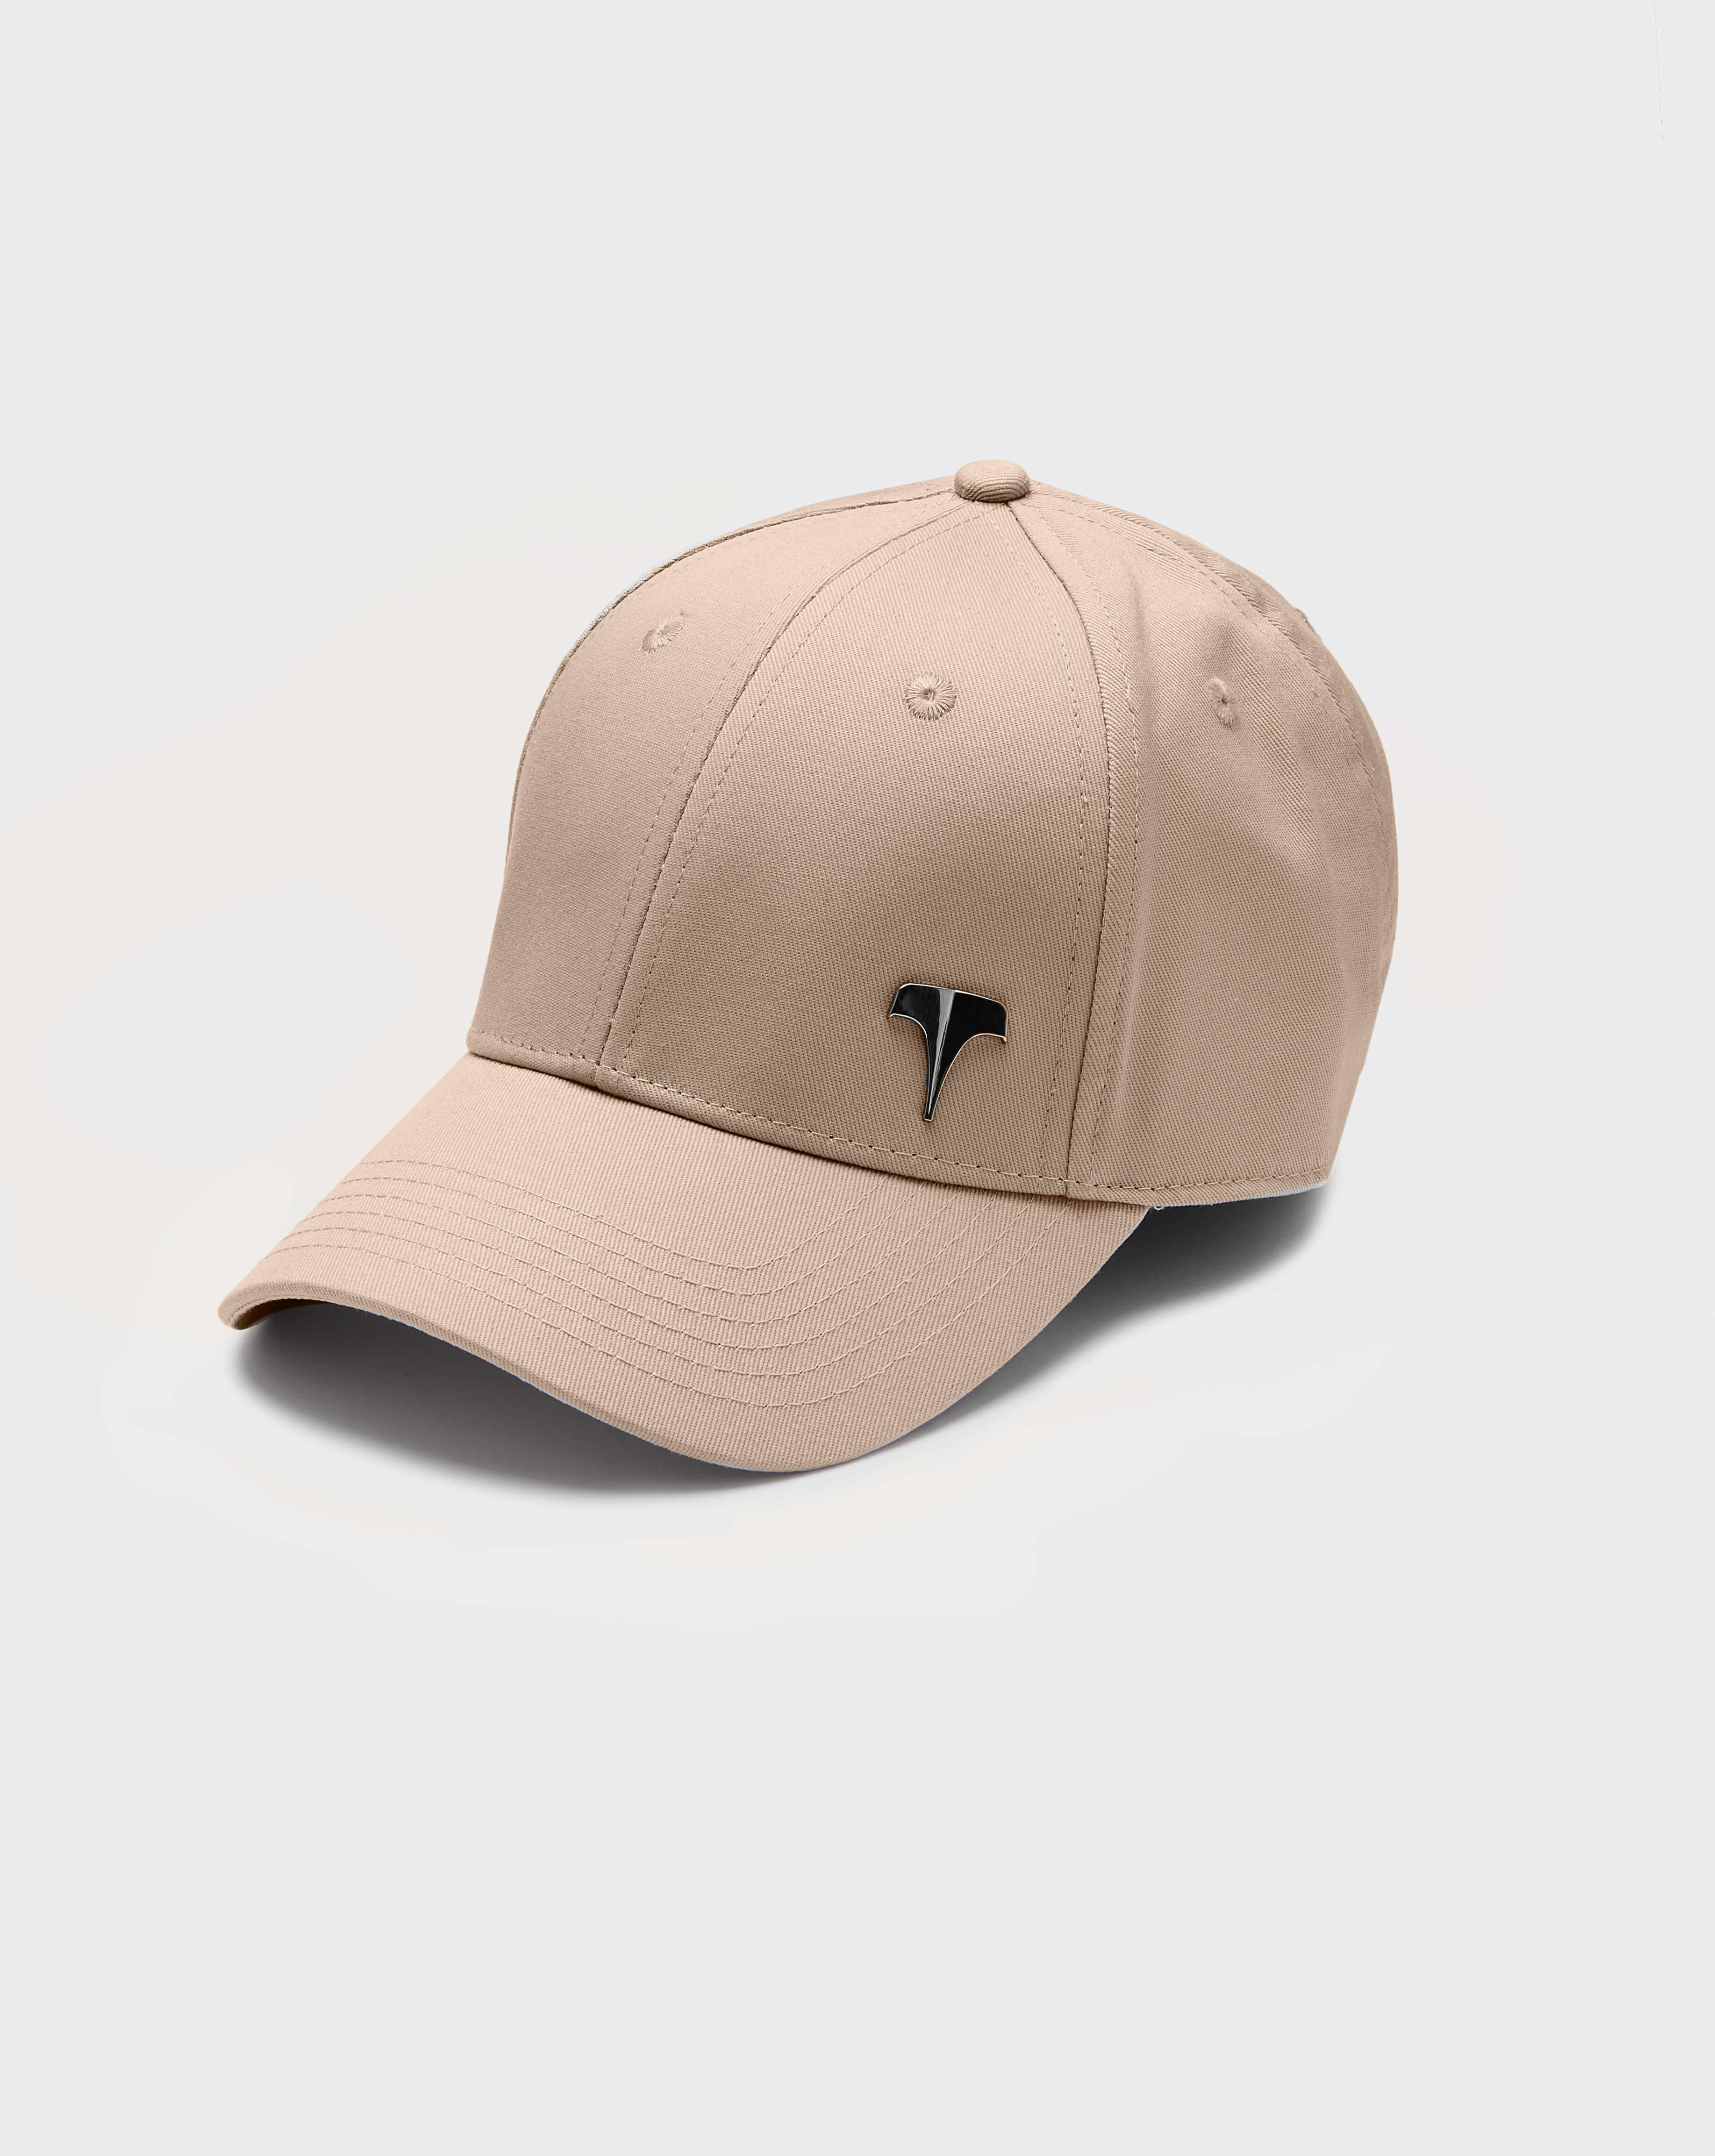 Twinzz beige pitcher cap with silver logo